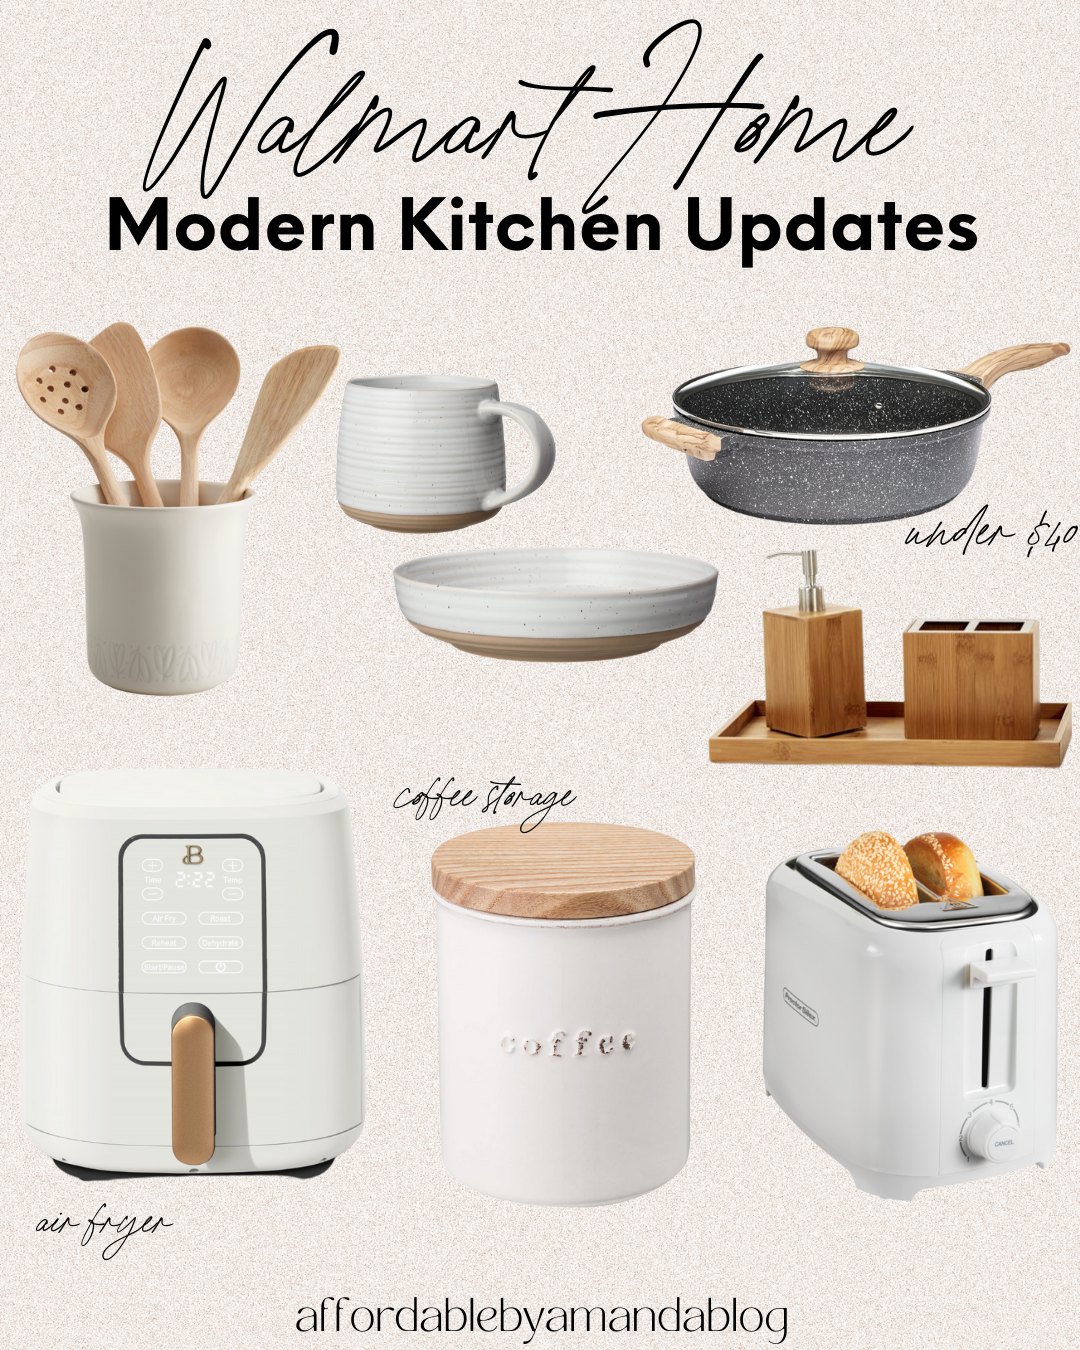 https://affordablebyamanda.com/wp-content/uploads/2022/01/walmart-modern-kitchen-updates.png